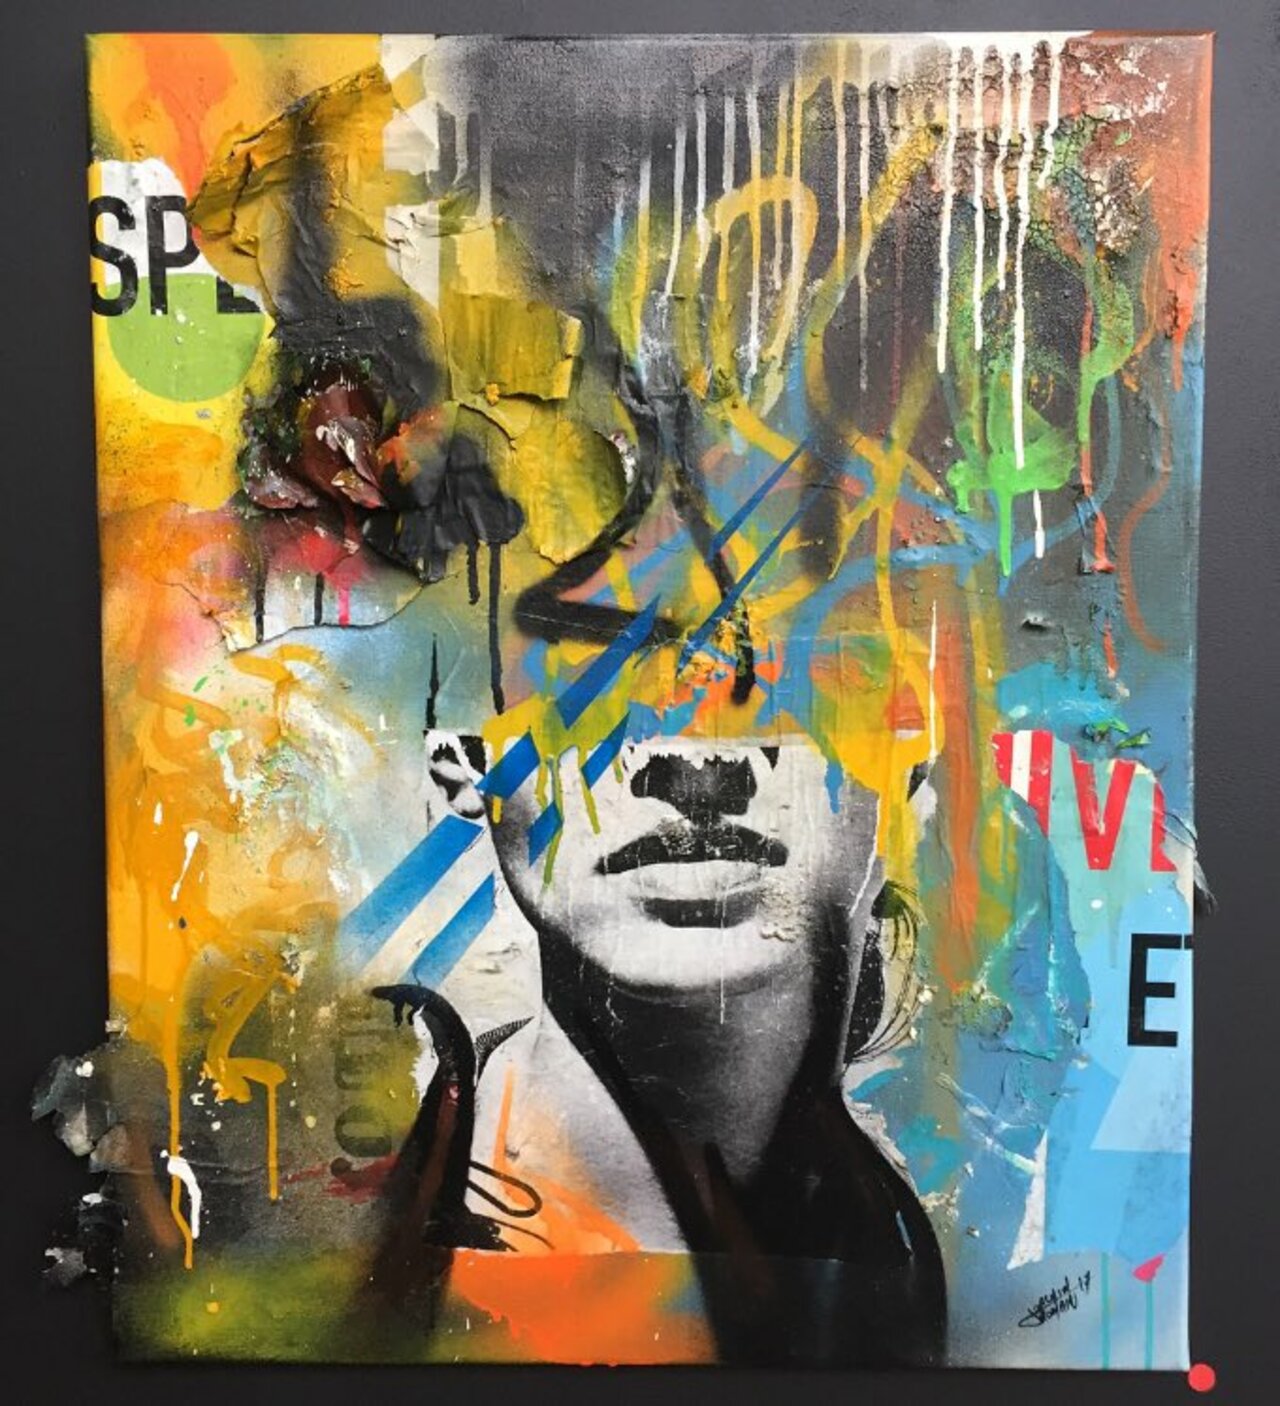 By @joachimromain75 #joachimromain at @GalerieArtCraft #streetart #graffiti #spray #instagraff #urbanart #cut #paste #collage #nirindastreet #galerieartandcraft #paris https://t.co/3hZFdR2swH